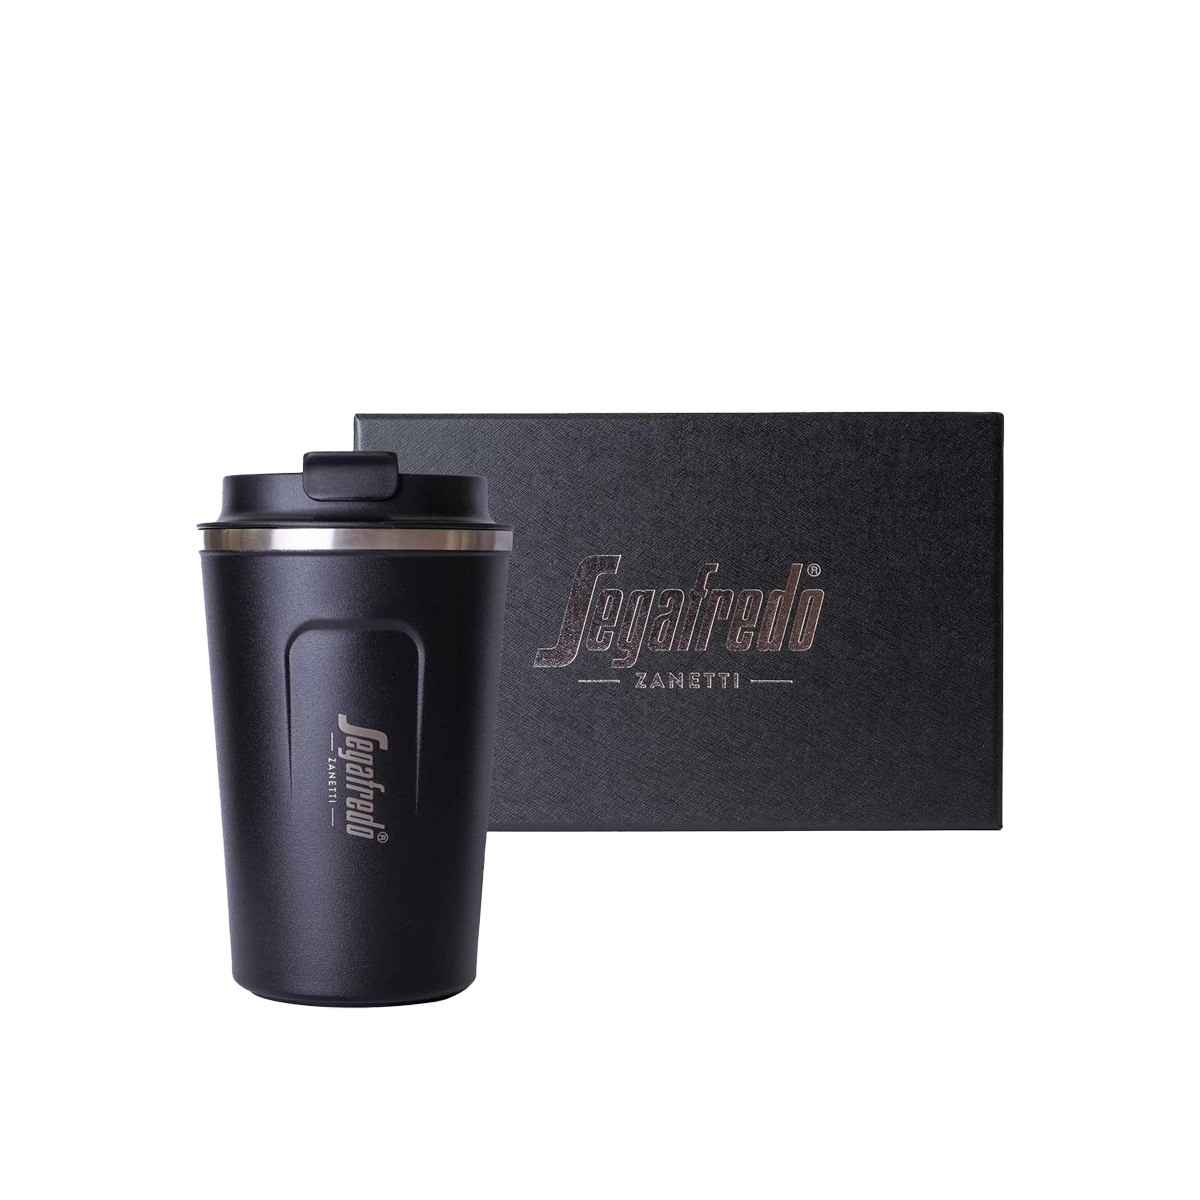 Segafredo Zanetti - Stainless Steel Vacuum Thermos Mug (380ml)